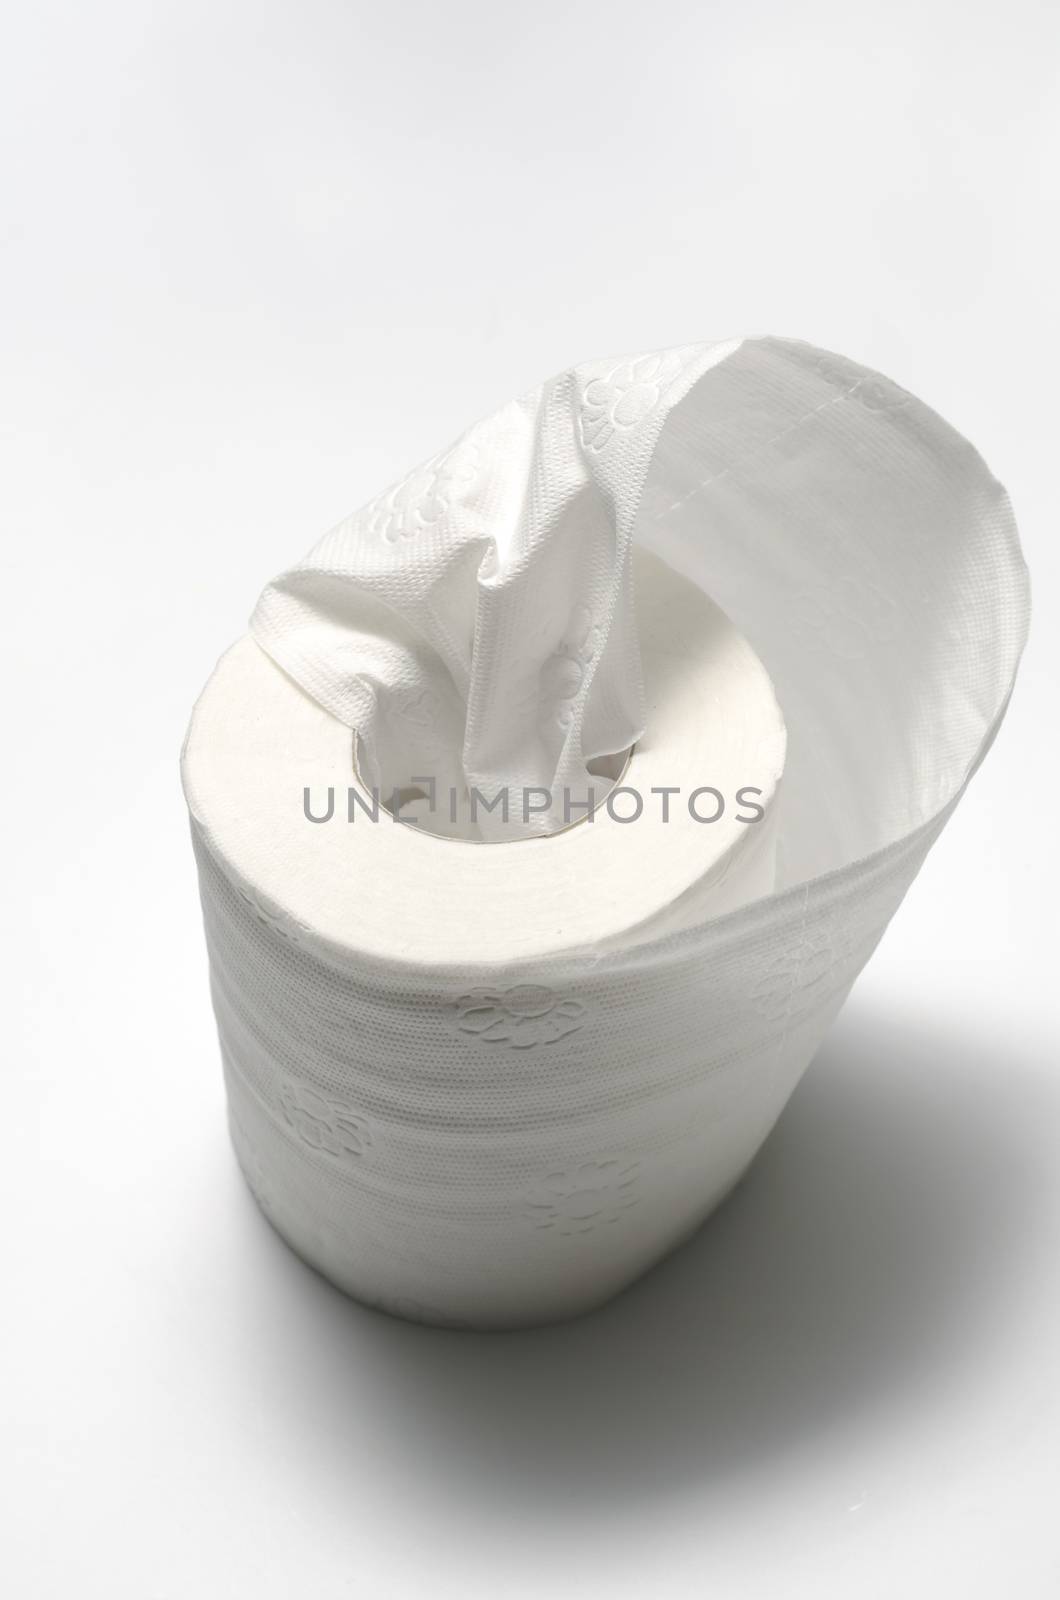 tissue on a white background